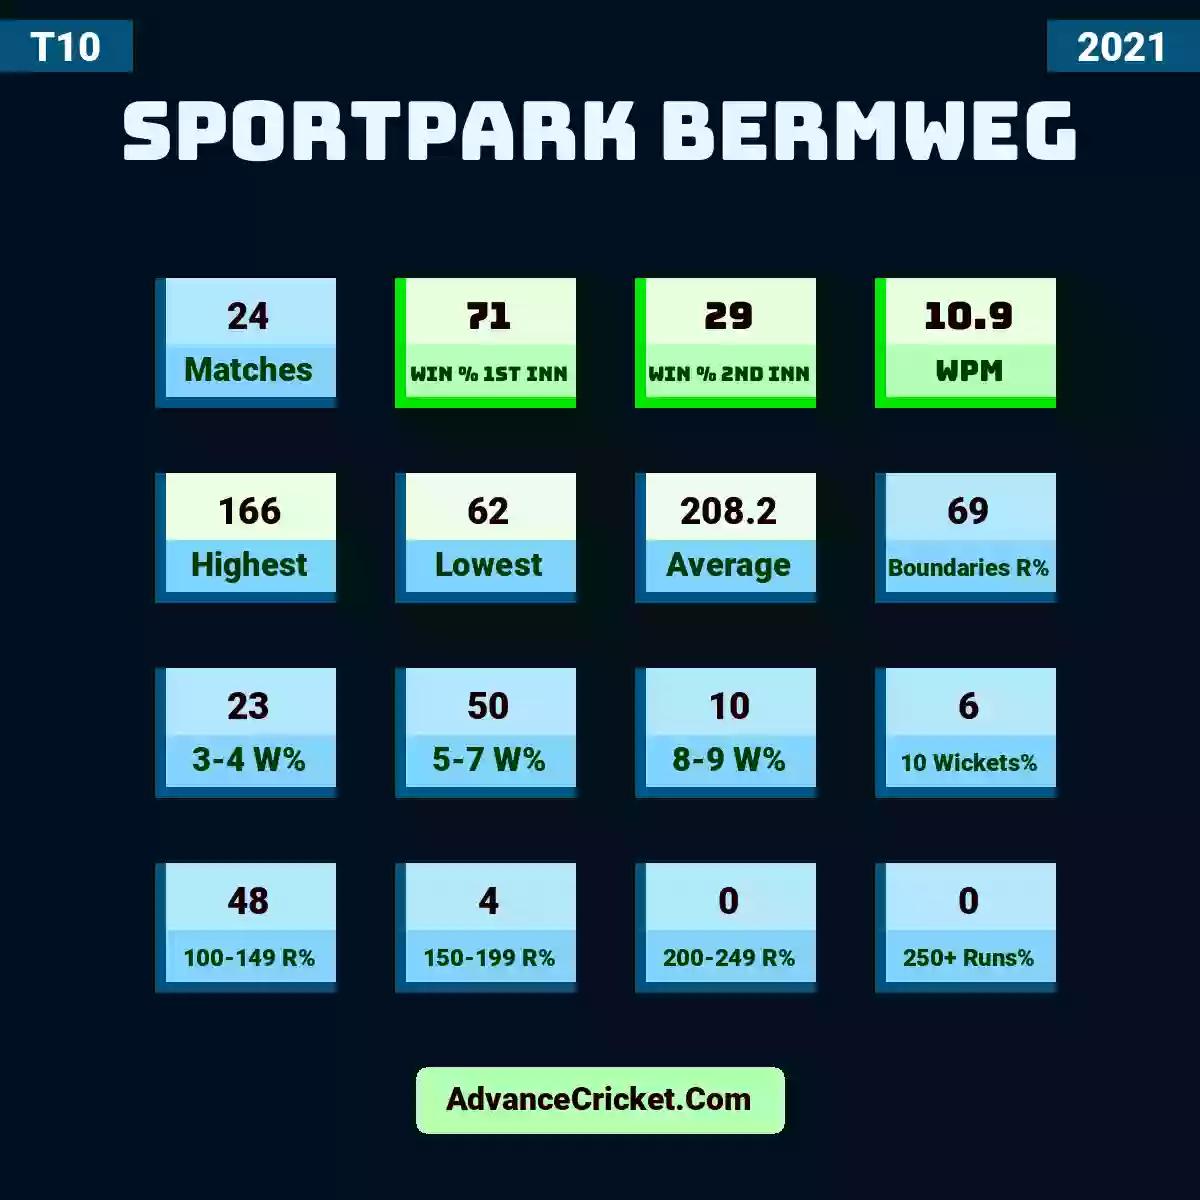 Image showing Sportpark Bermweg with Matches: 24, Win % 1st Inn: 71, Win % 2nd Inn: 29, WPM: 10.9, Highest: 166, Lowest: 62, Average: 208.2, Boundaries R%: 69, 3-4 W%: 23, 5-7 W%: 50, 8-9 W%: 10, 10 Wickets%: 6, 100-149 R%: 48, 150-199 R%: 4, 200-249 R%: 0, 250+ Runs%: 0.